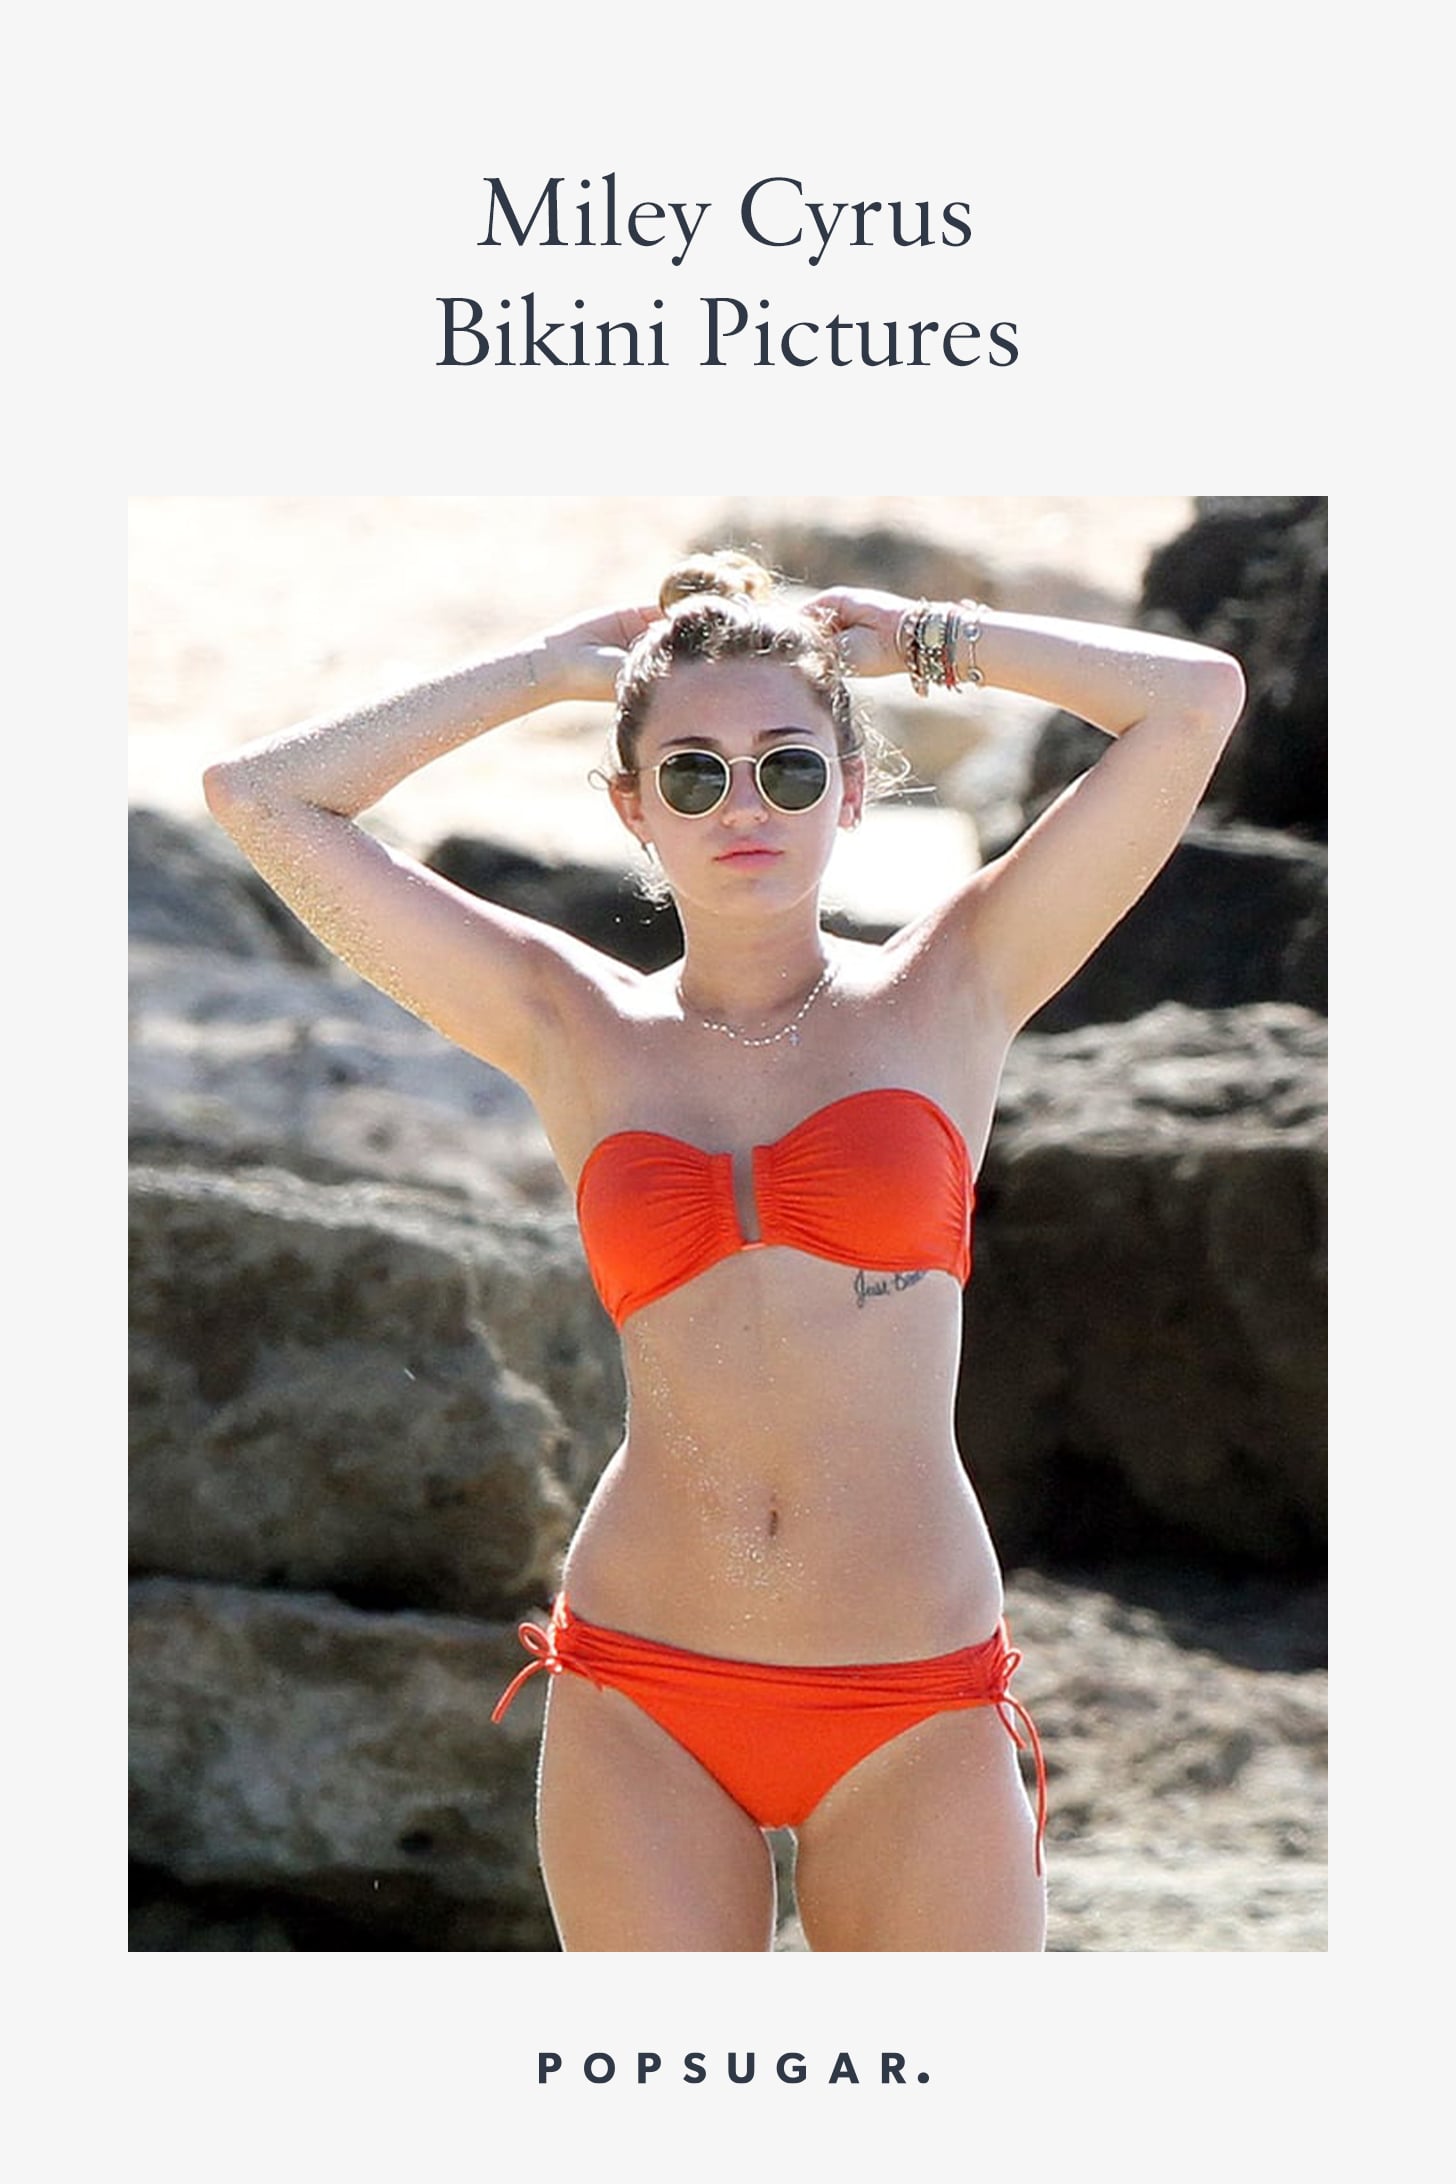 Bikini Shemale Miley Cyrus - Miley Cyrus Bikini Pictures | POPSUGAR Celebrity